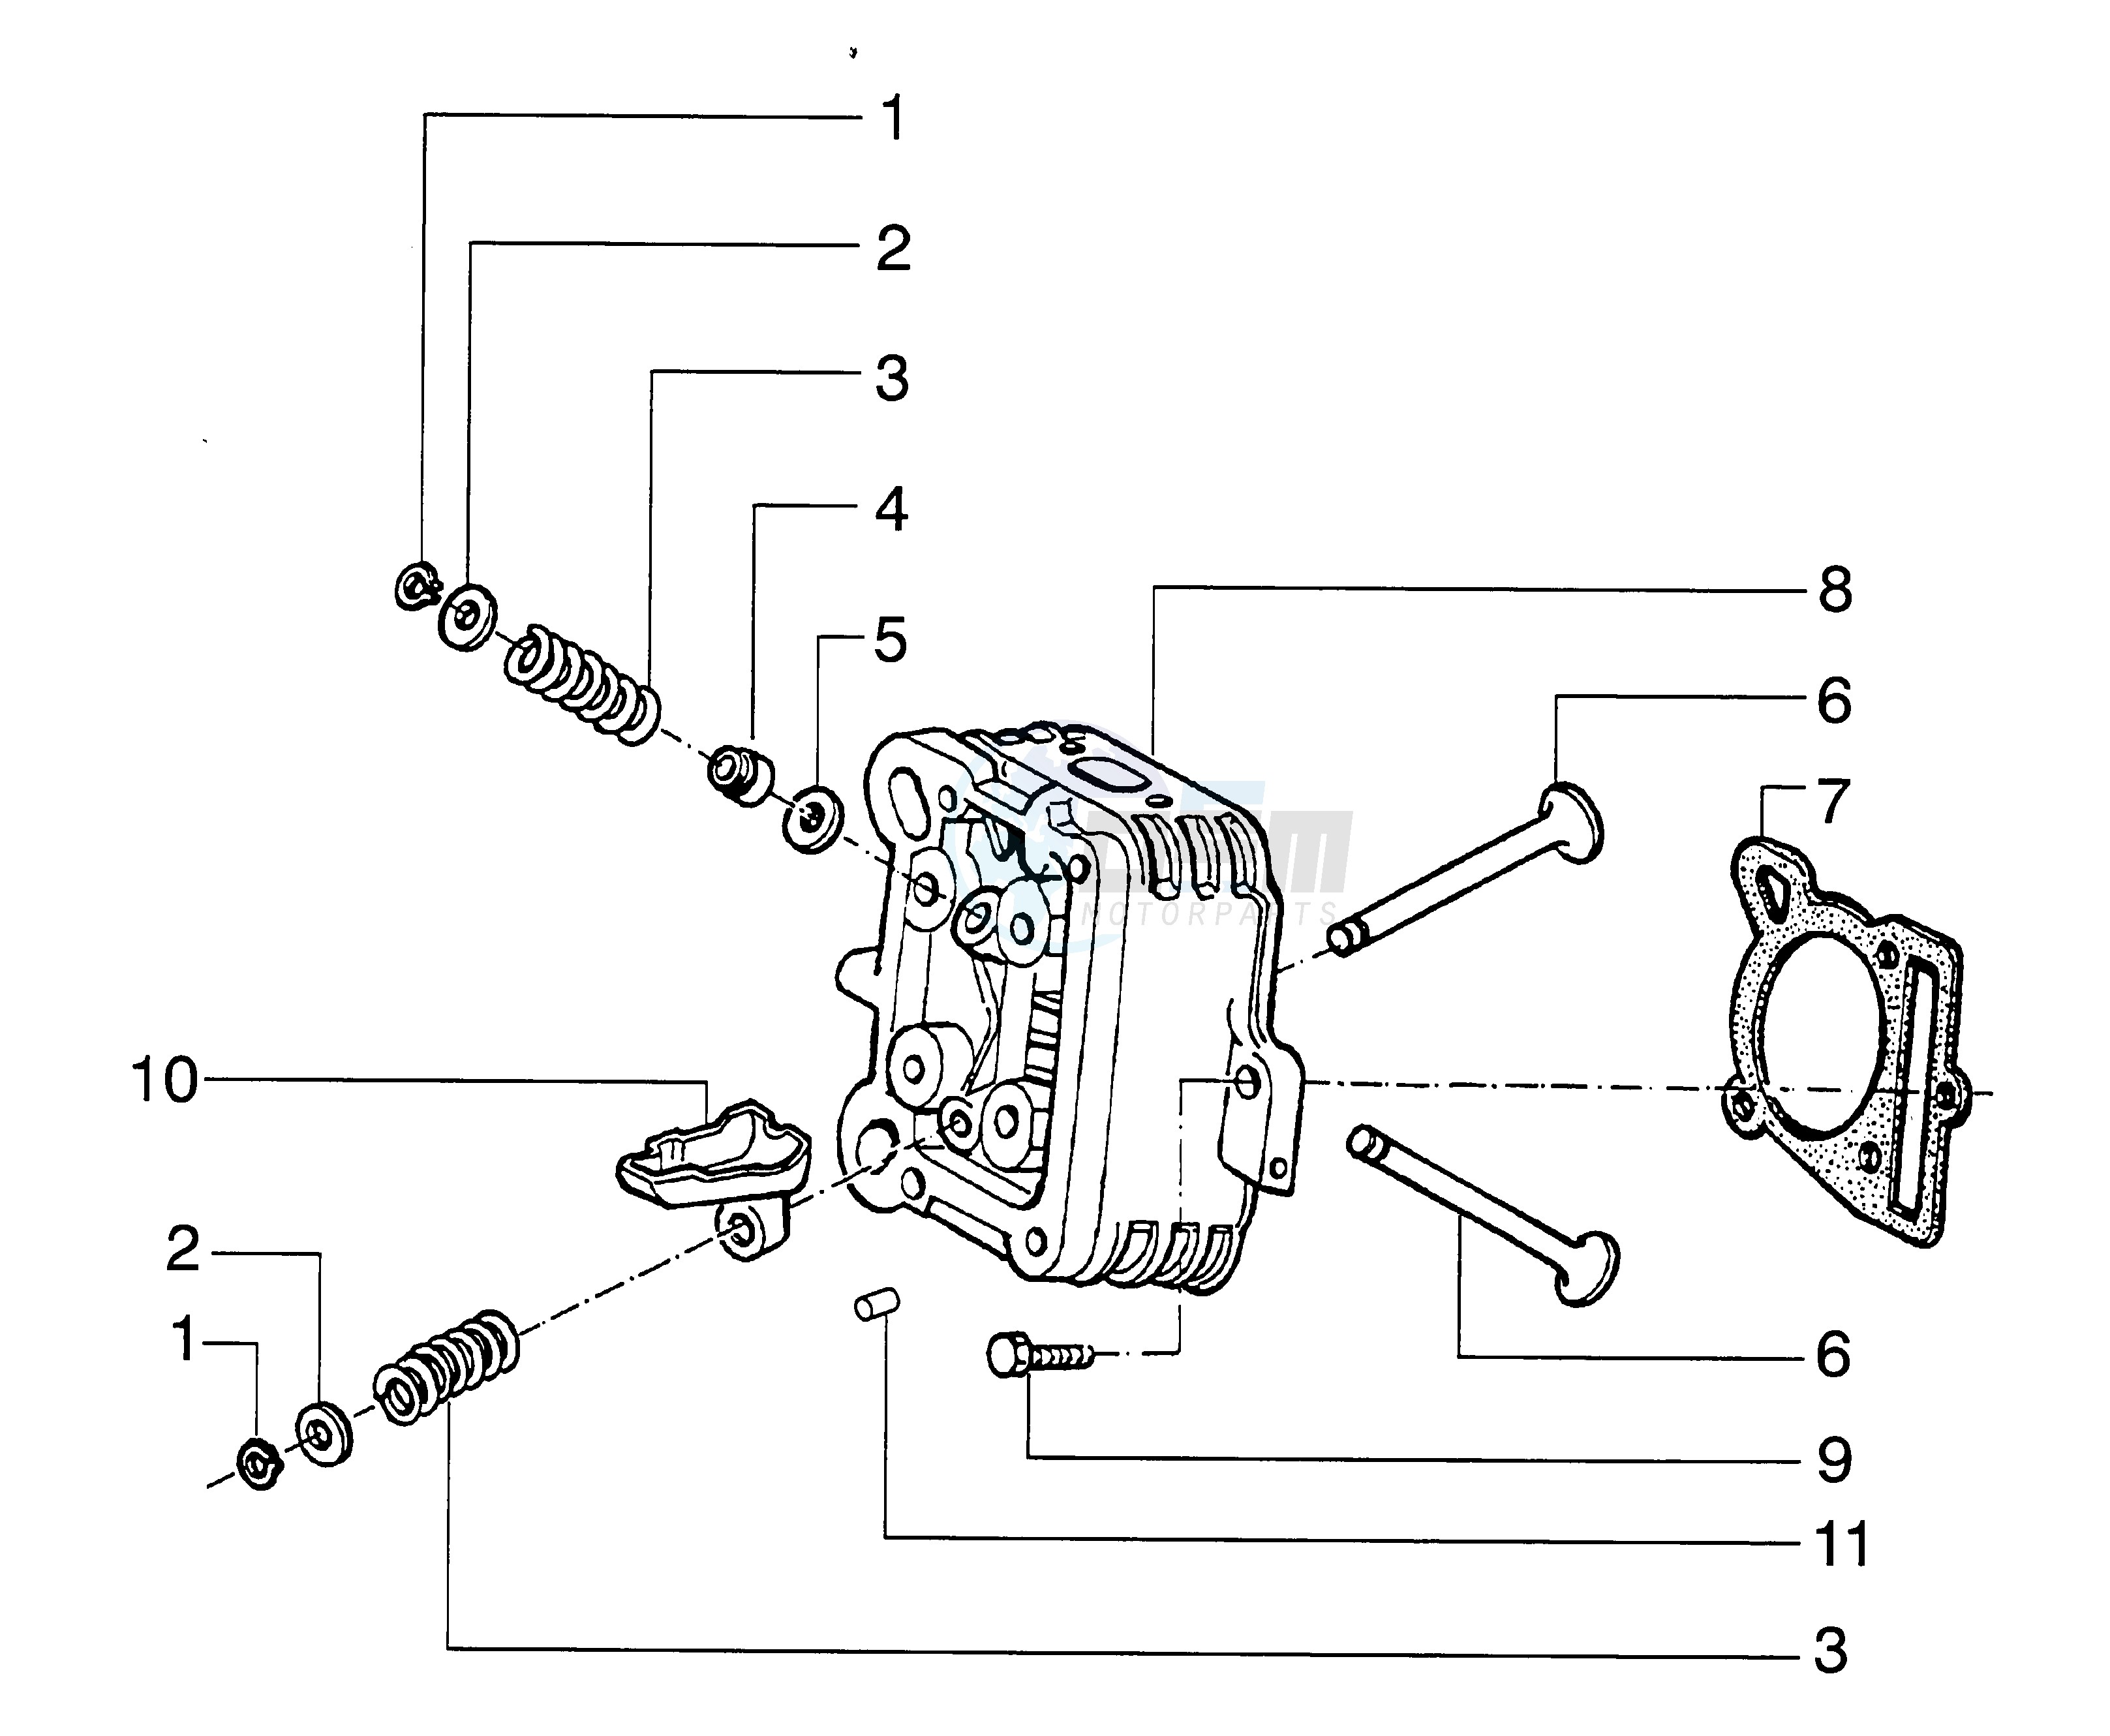 Cylinder head - valves blueprint